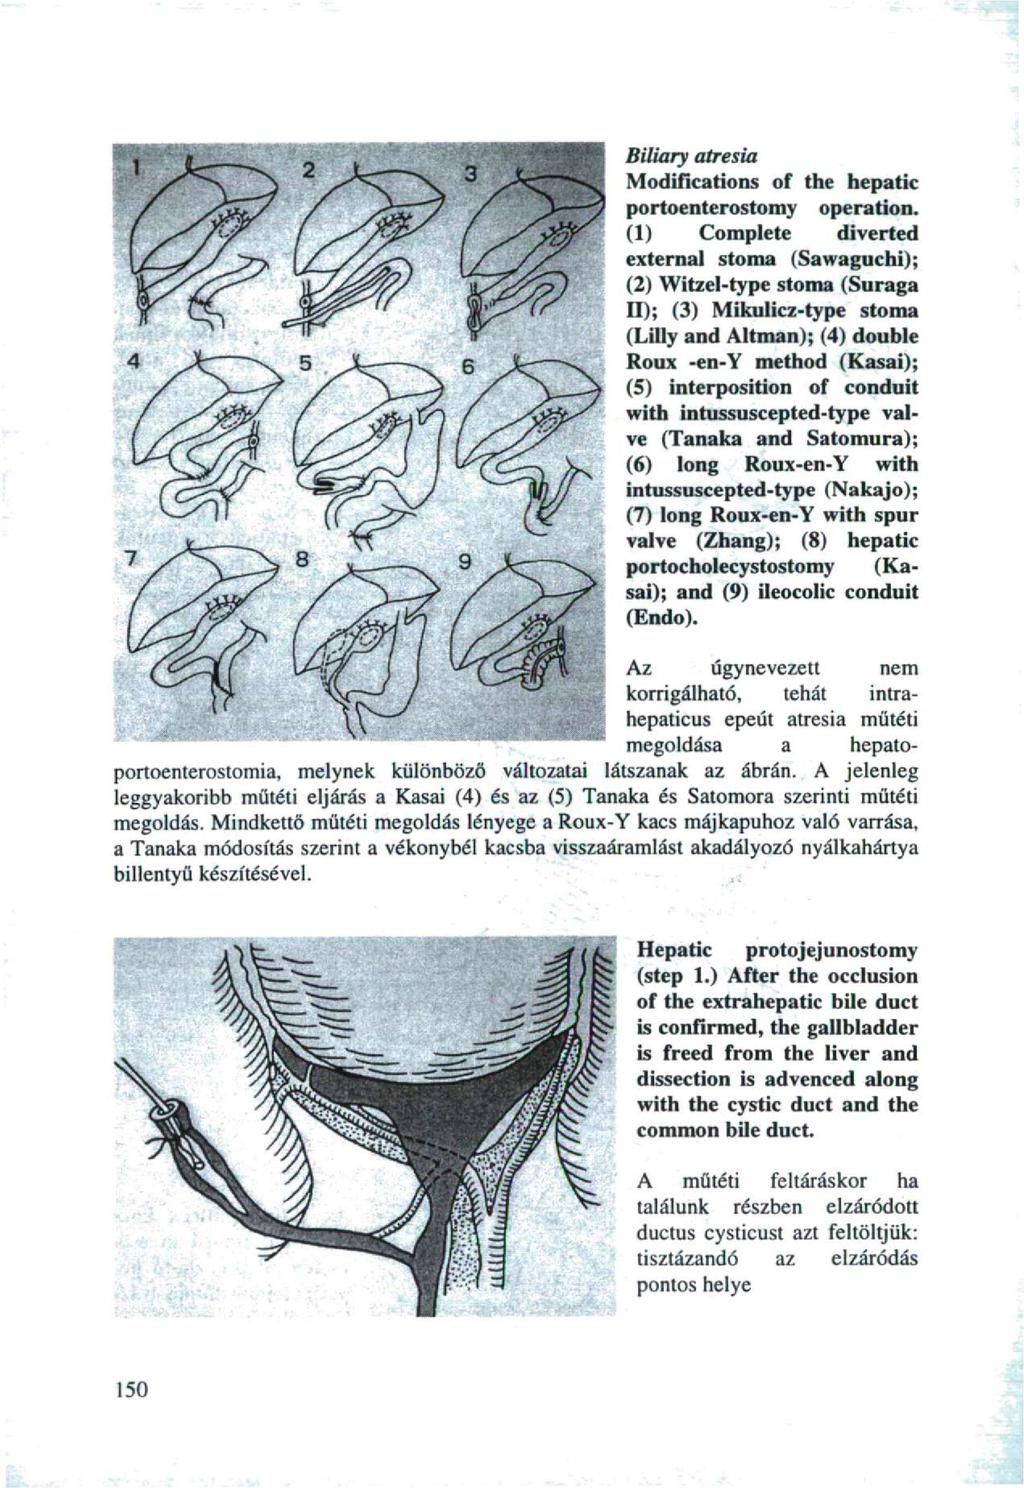 Biliary atresia Modifications of the hepatic portoenterostomy operation.